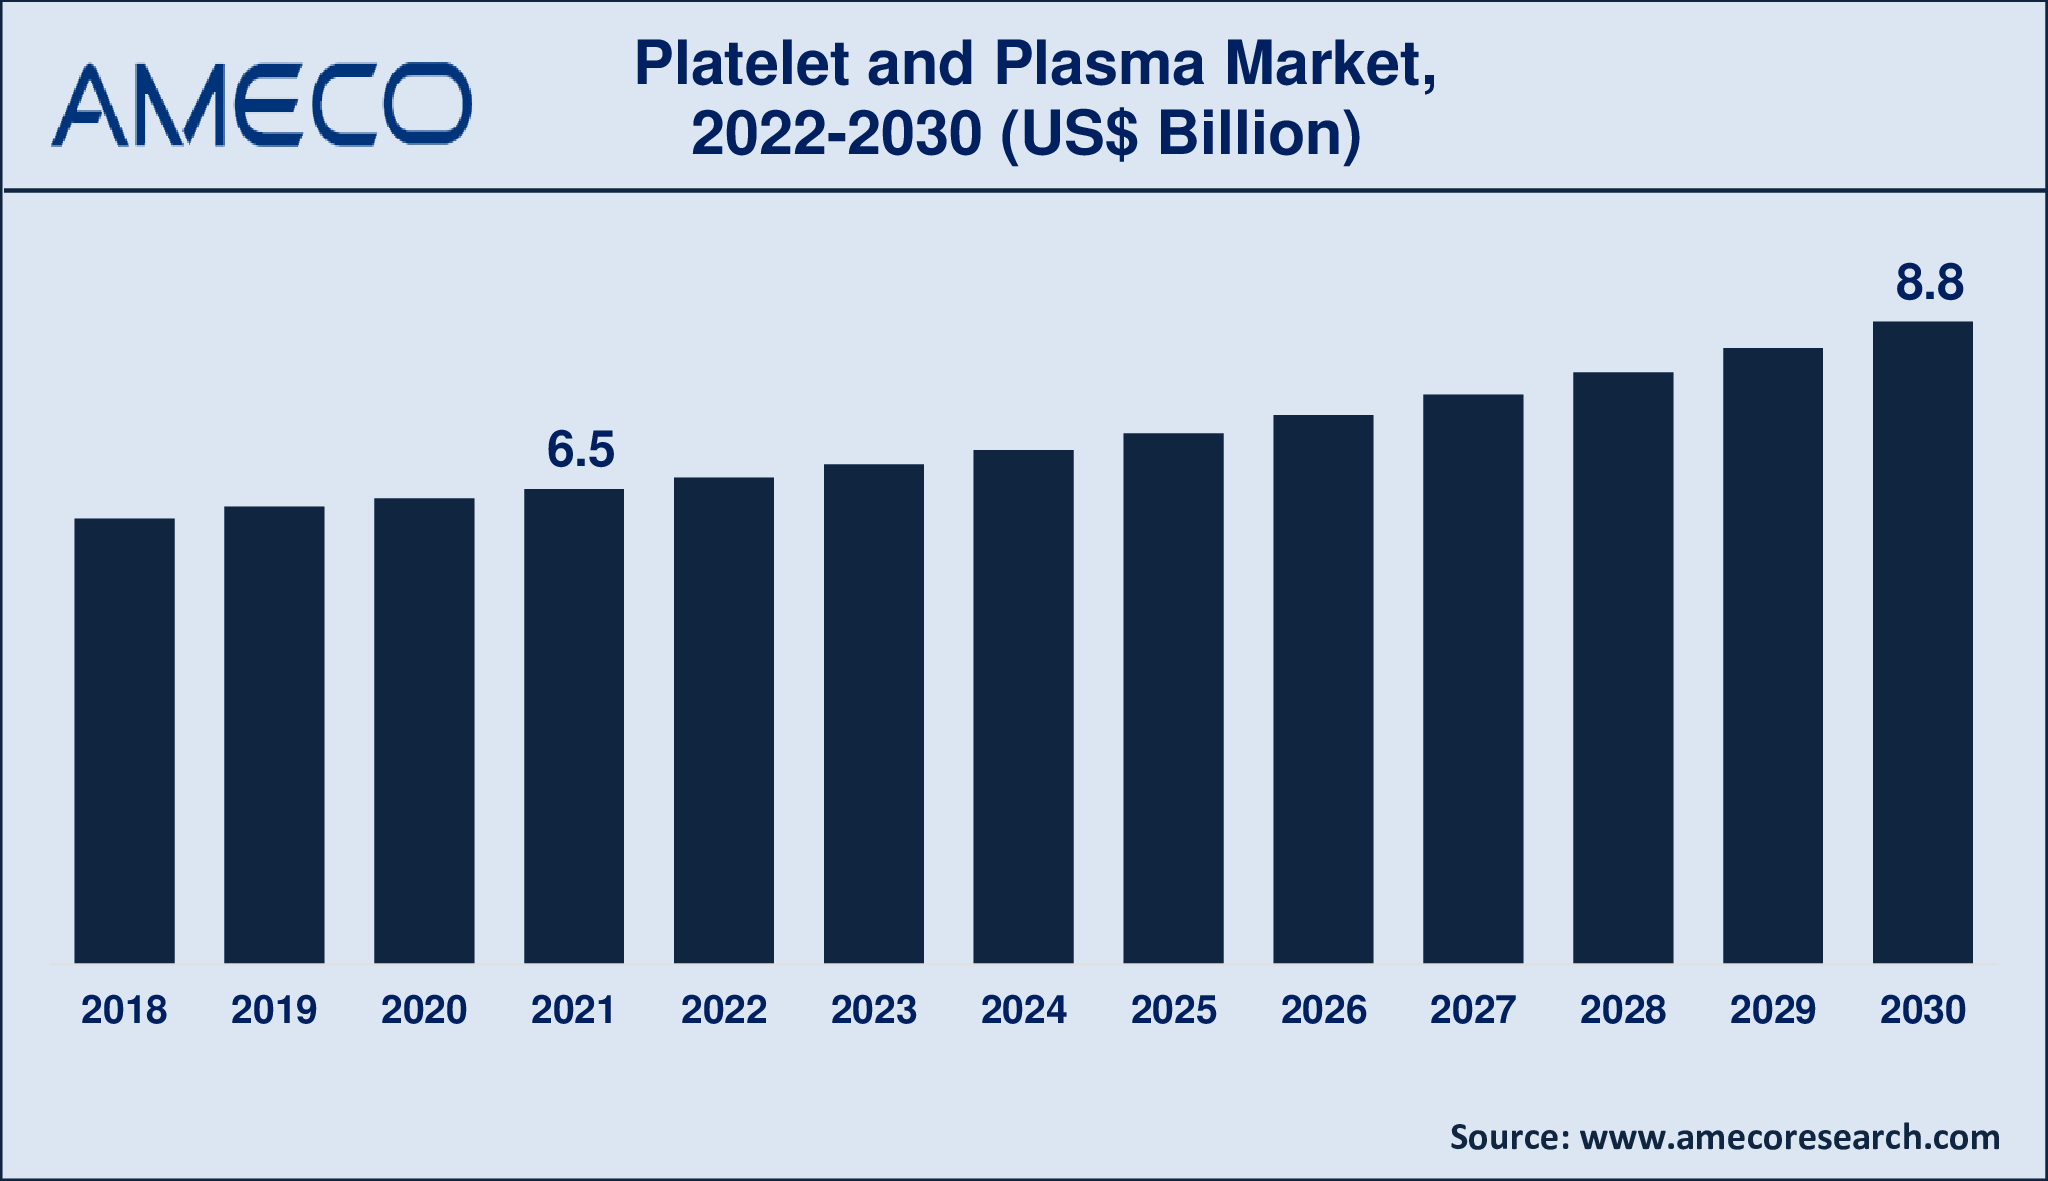 Platelets and Plasma Market Report 2030